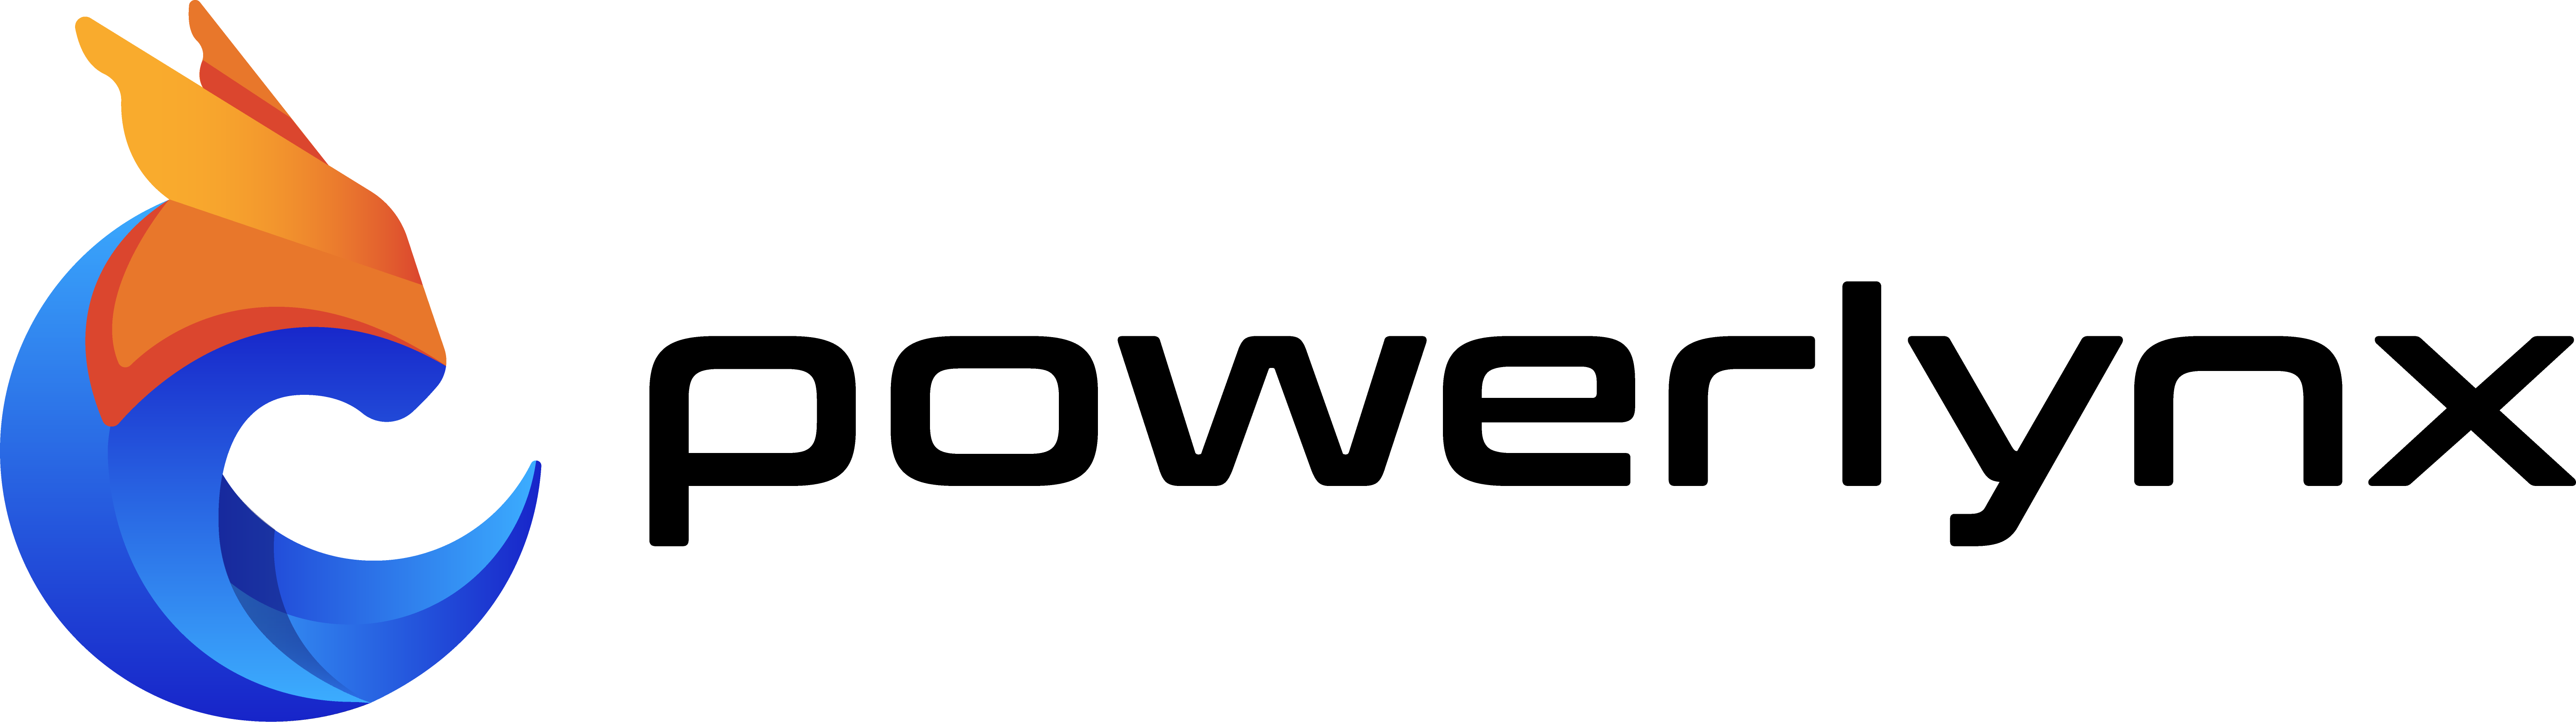 Powerlynx logo